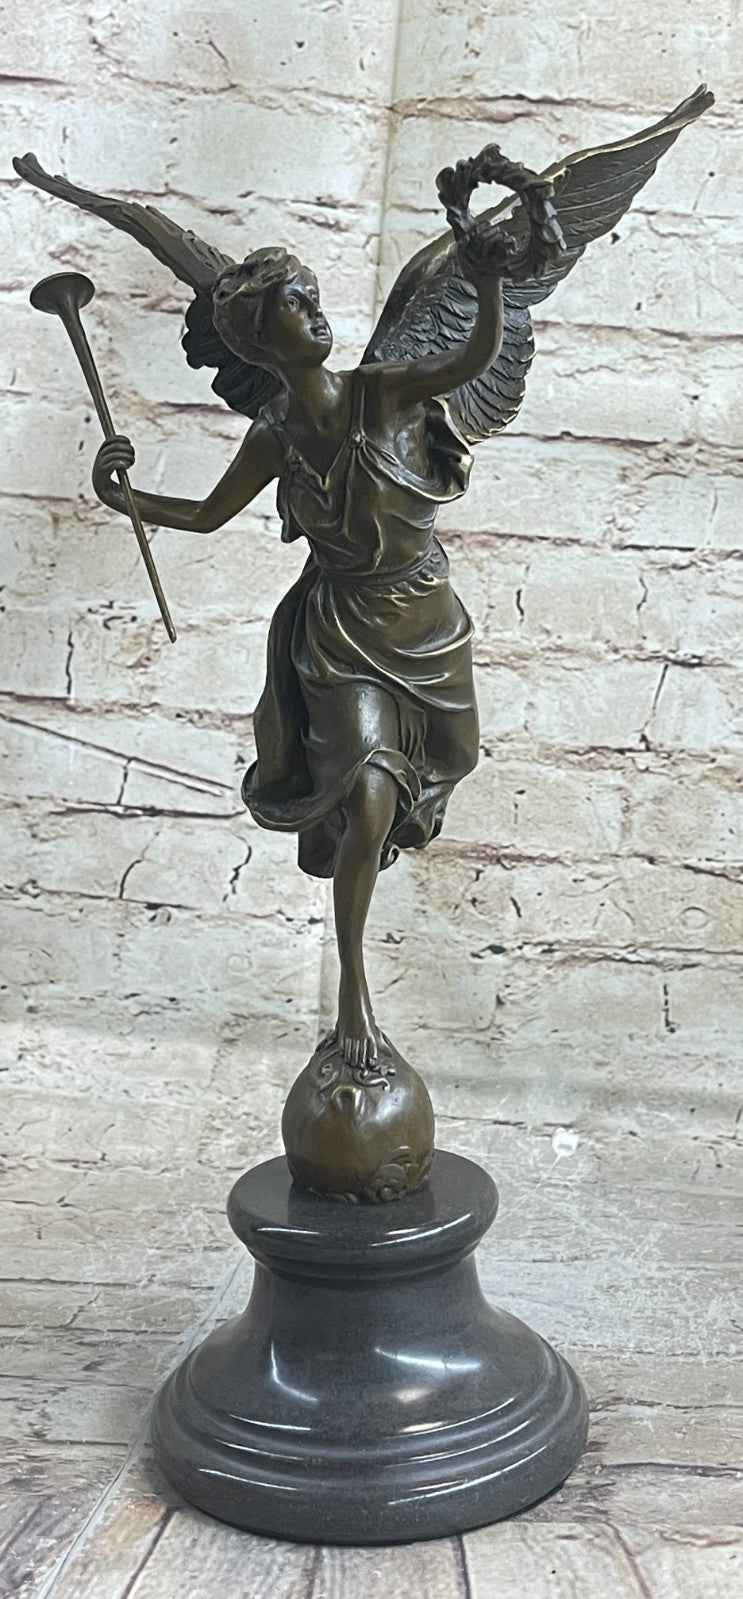 NIKE Goddess Winged Female Warrior Bronze Sculpture 16" x 8" Statue Sale Figurine